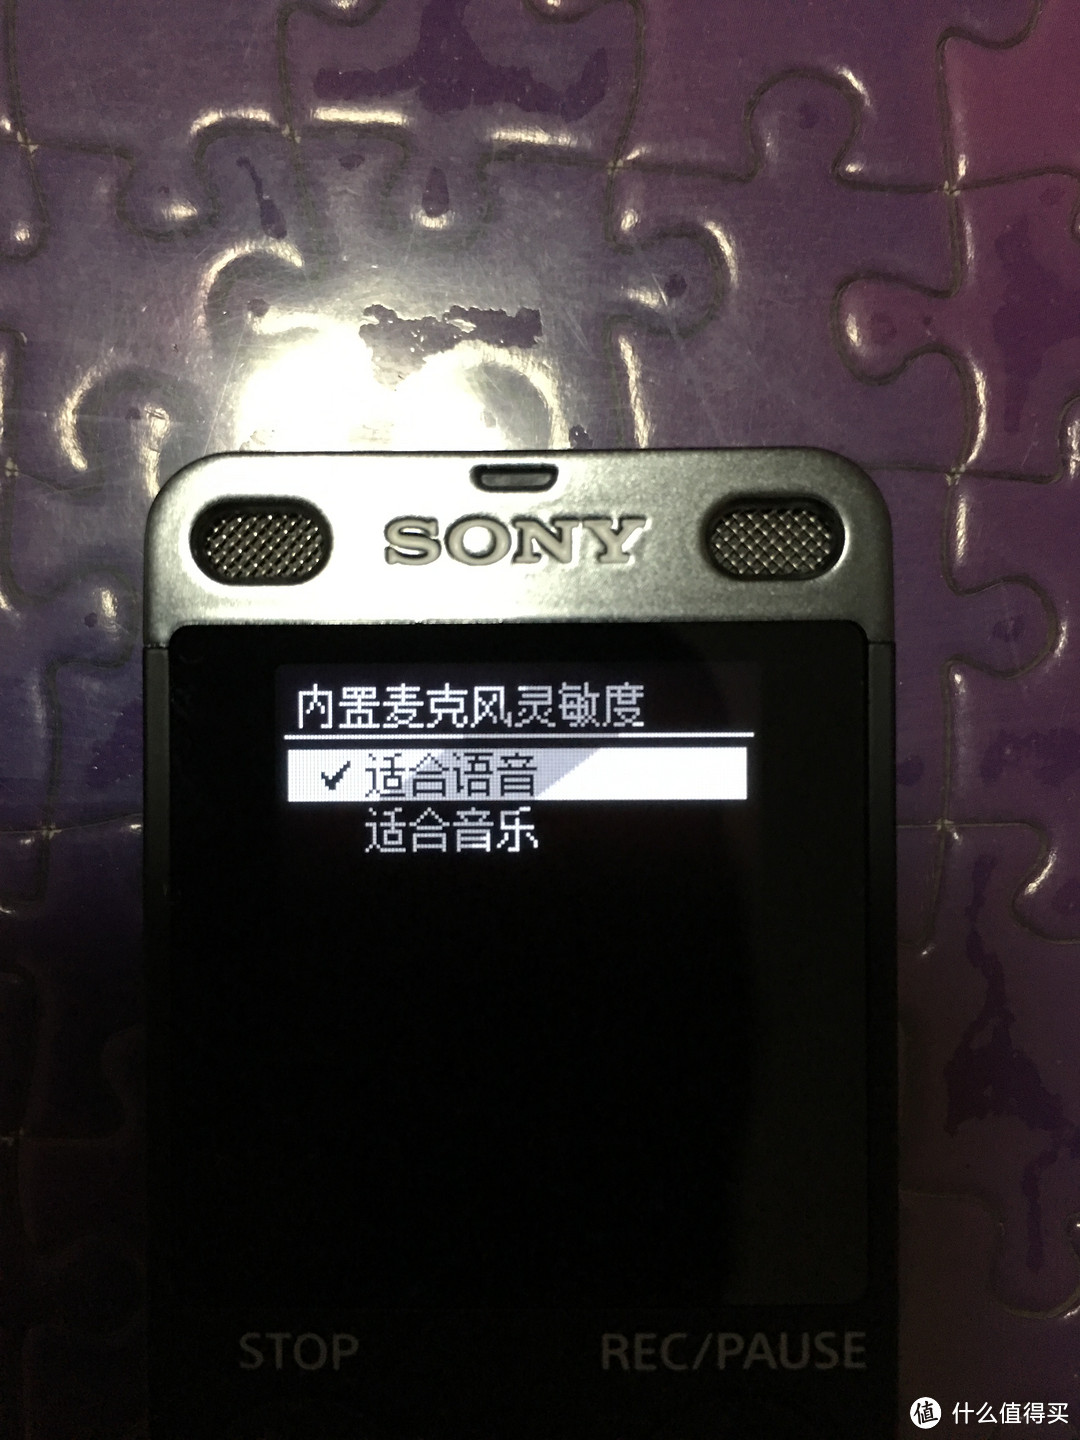 Sony 索尼 UX560f 数字录音笔 开箱简单测评